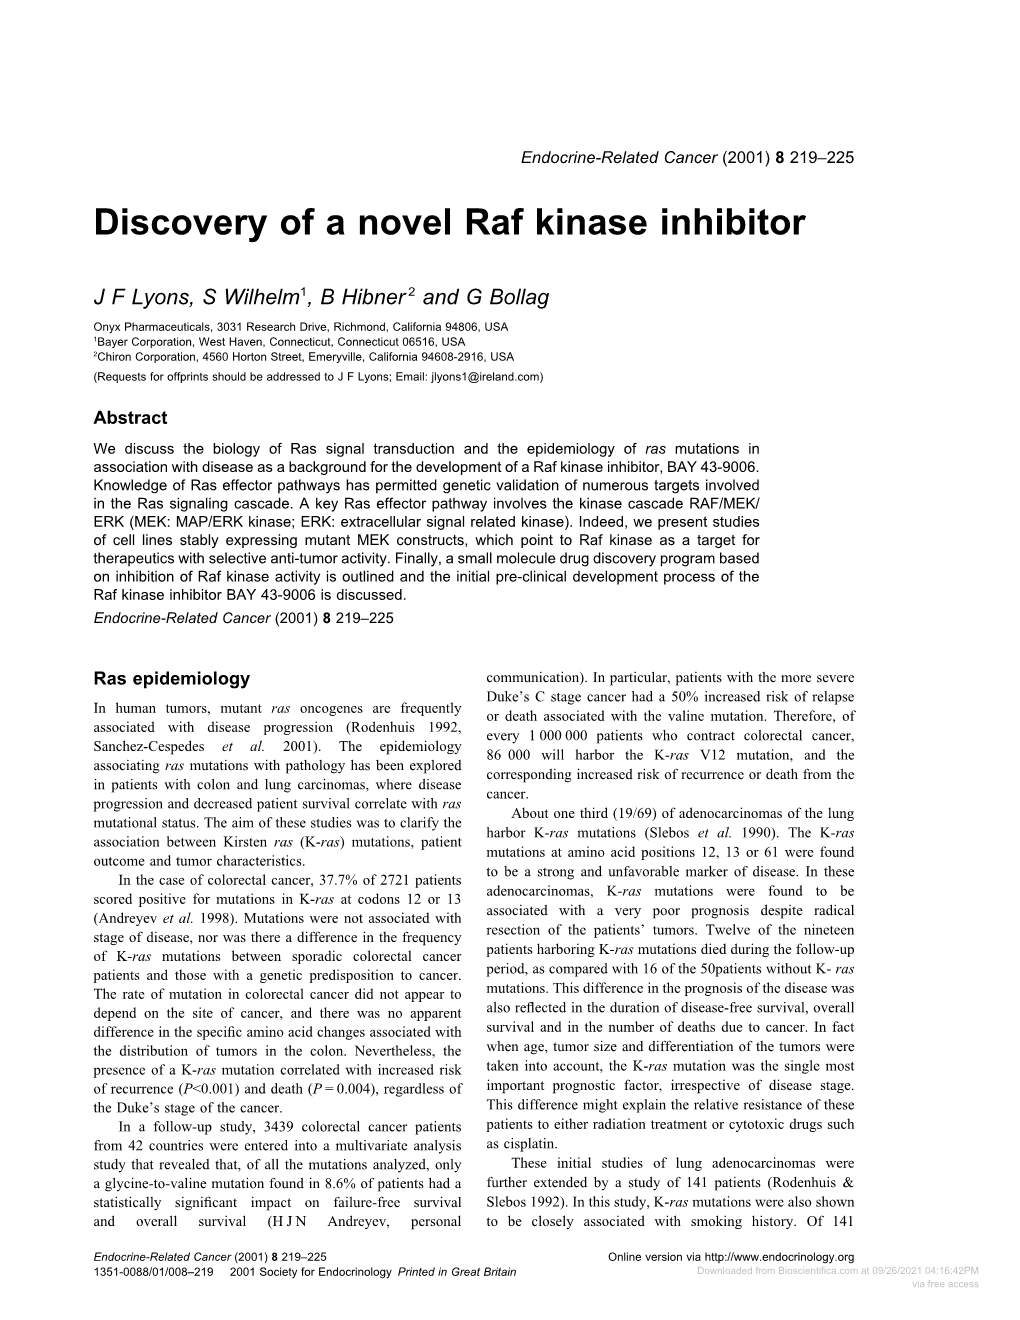 Discovery of a Novel Raf Kinase Inhibitor